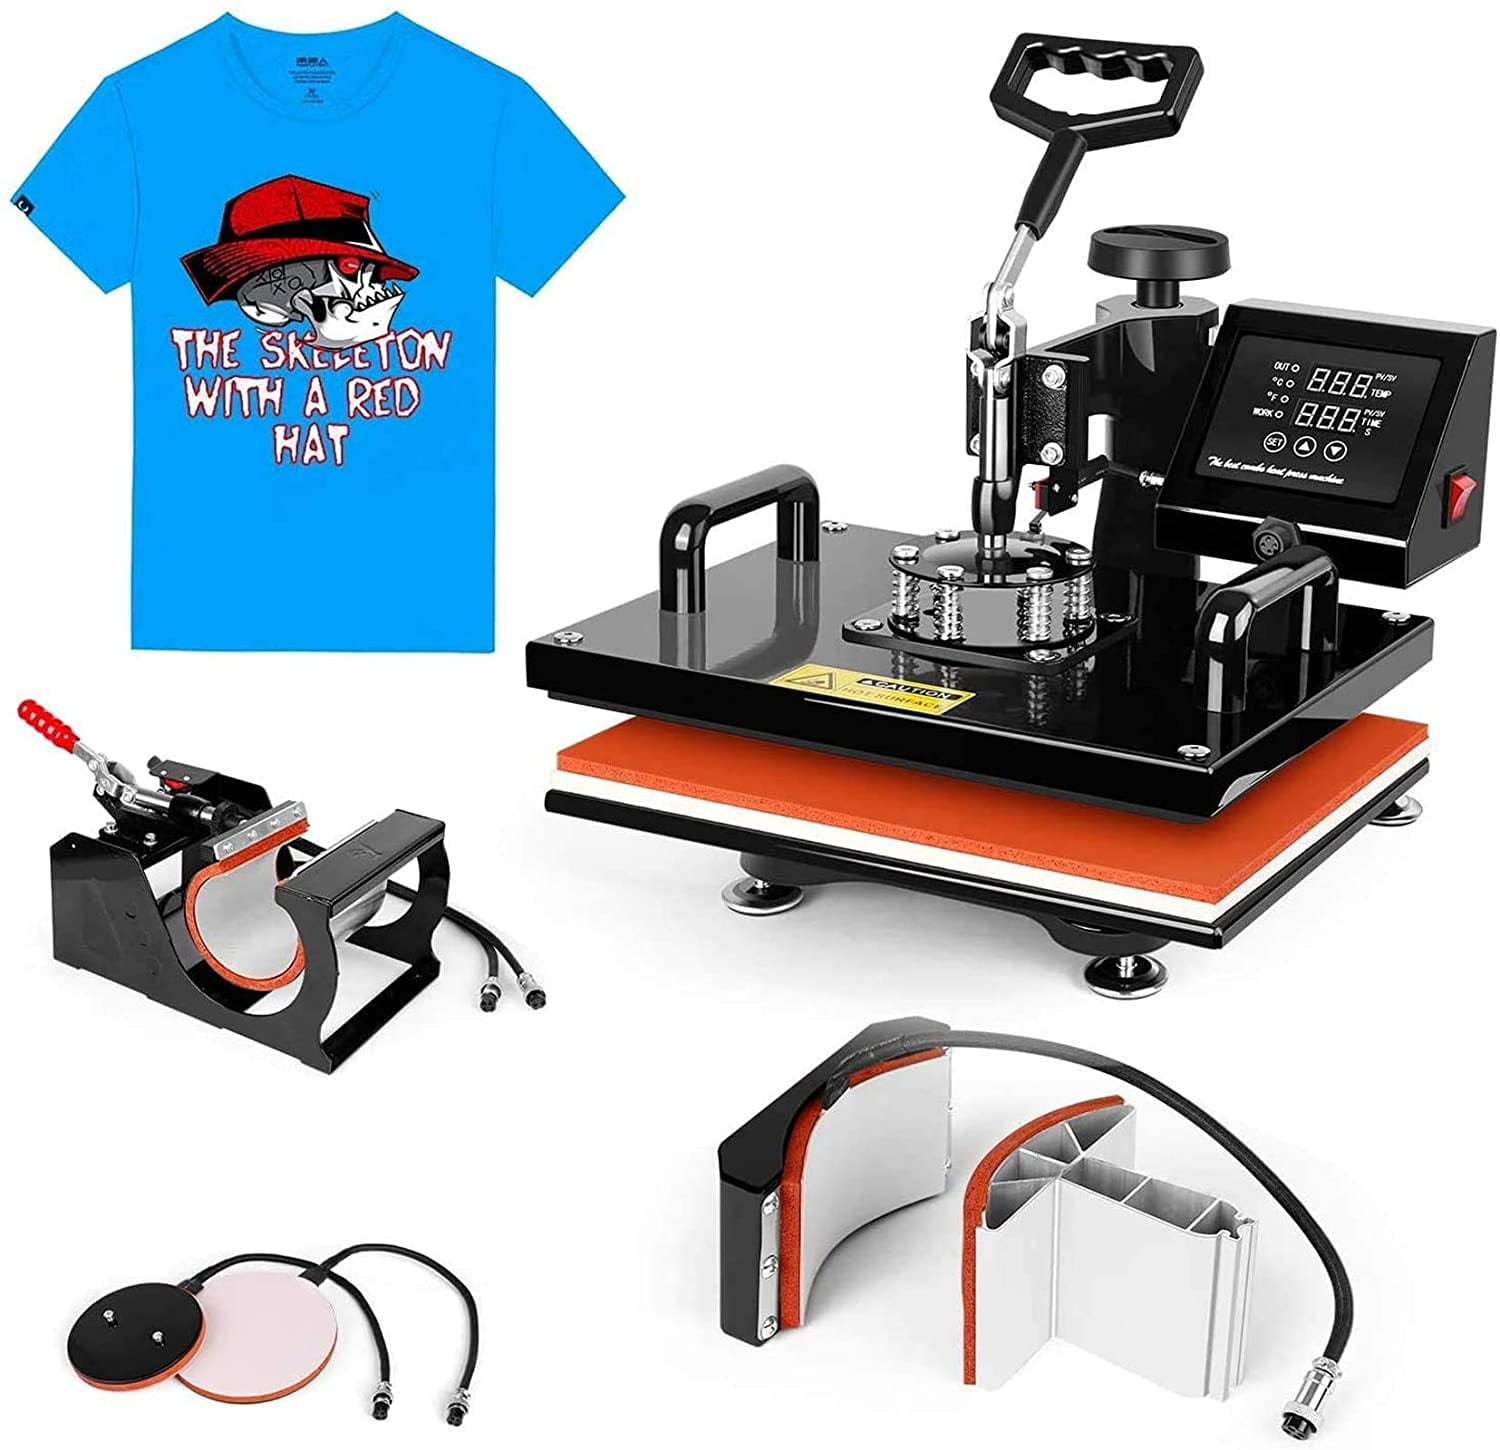  YITAHOME Heat Press Machine for T Shirts 15x12, 5-in-1 Mug Heat  Press, Hat Heat Transfer, 360° Rotation Swing-Away Plate Heatpress,  Dual-Tube Heating Printing for DIY T-Shirts, Caps, Mugs, Pillows : Arts